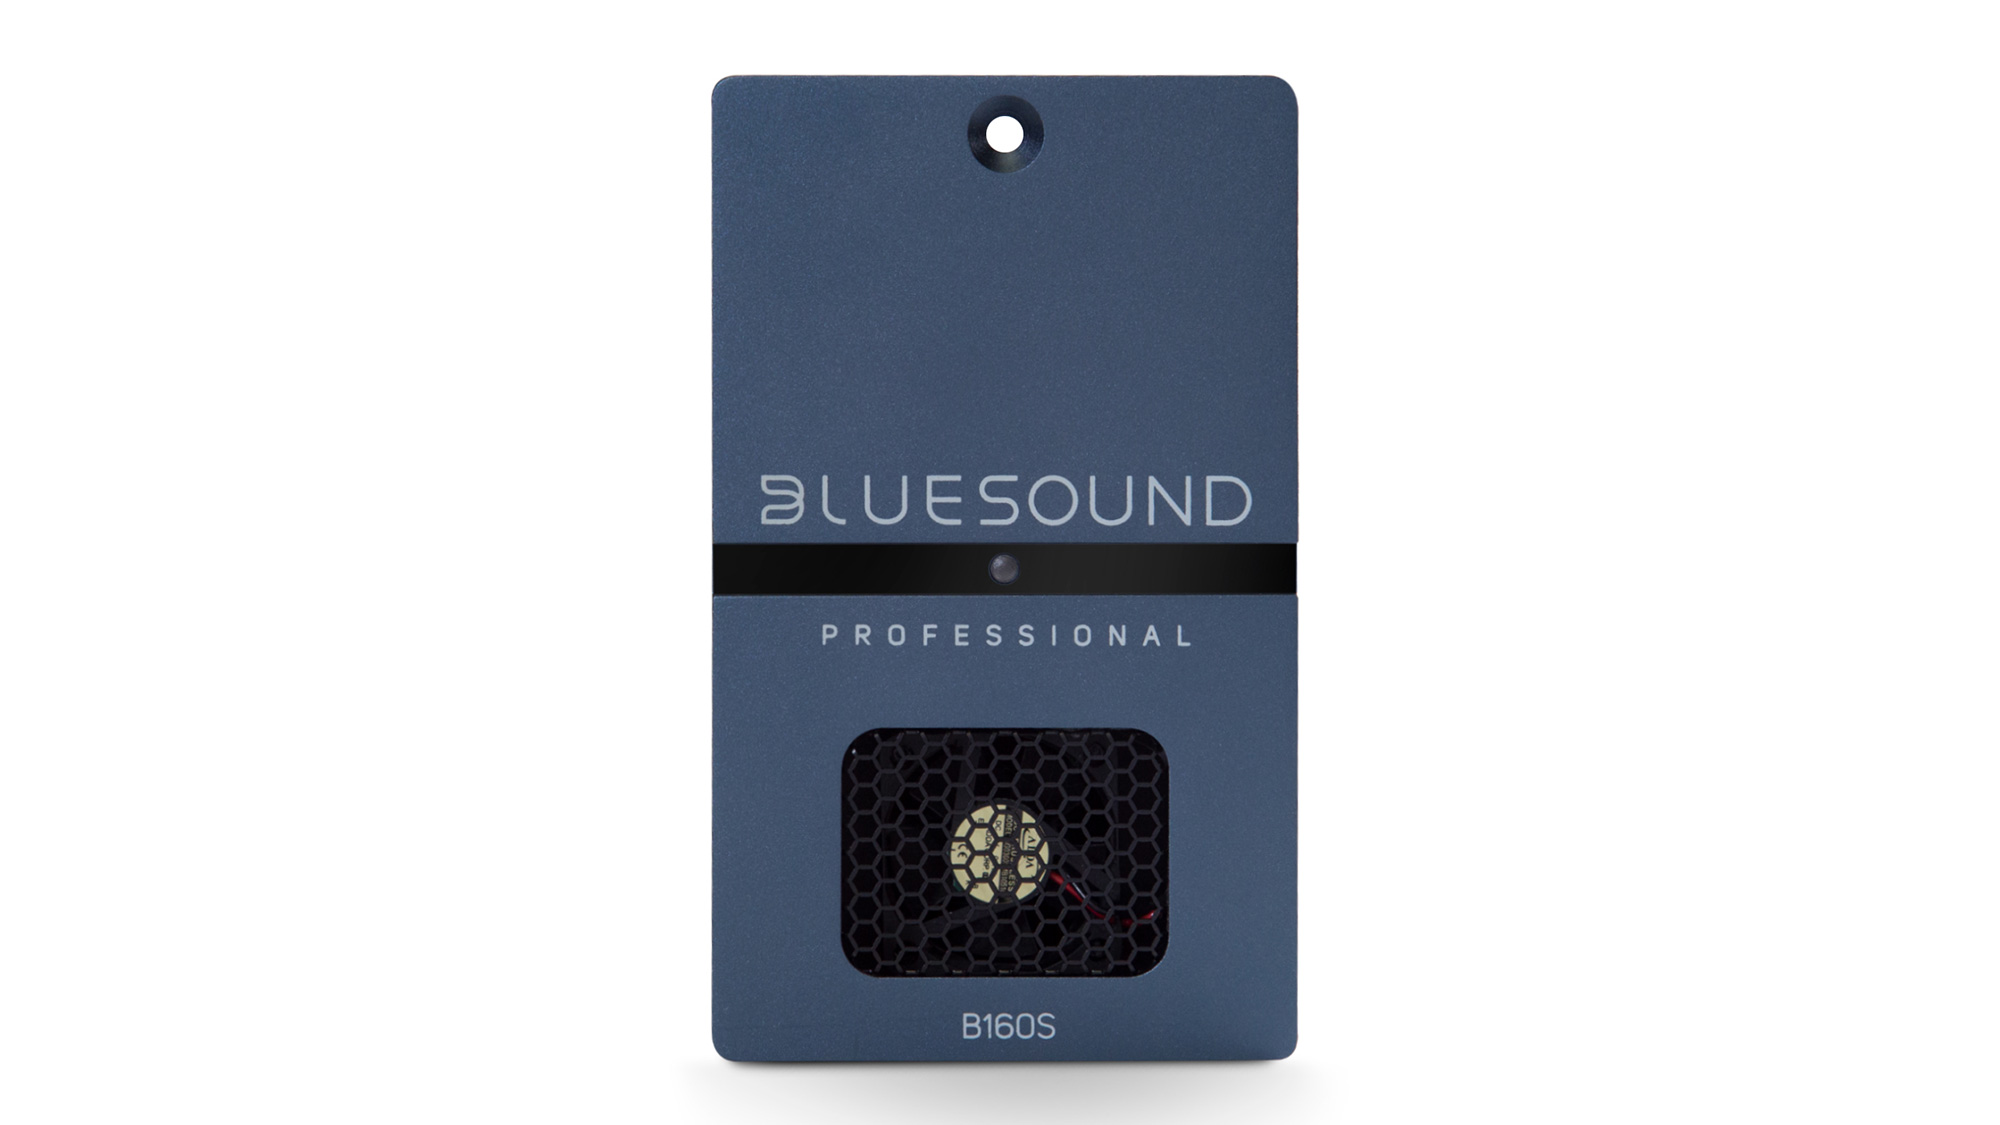 Bluesound Professional B160S Frontansicht